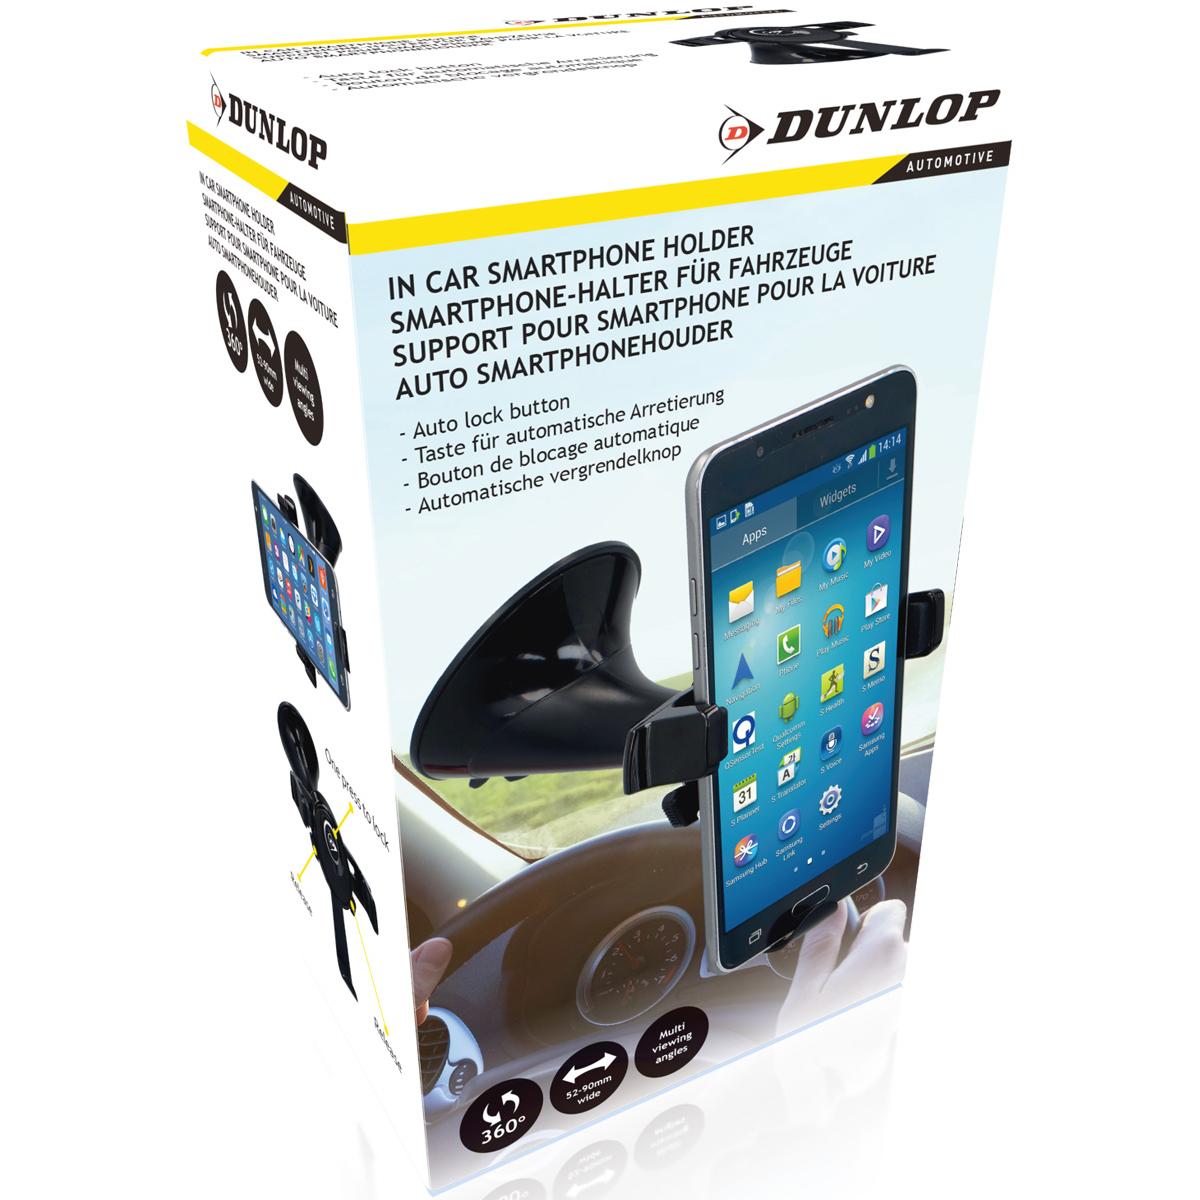 https://inforad.net/wp-content/uploads/2018/06/Dunlop-In-Car-Smartphone-Holder.jpg